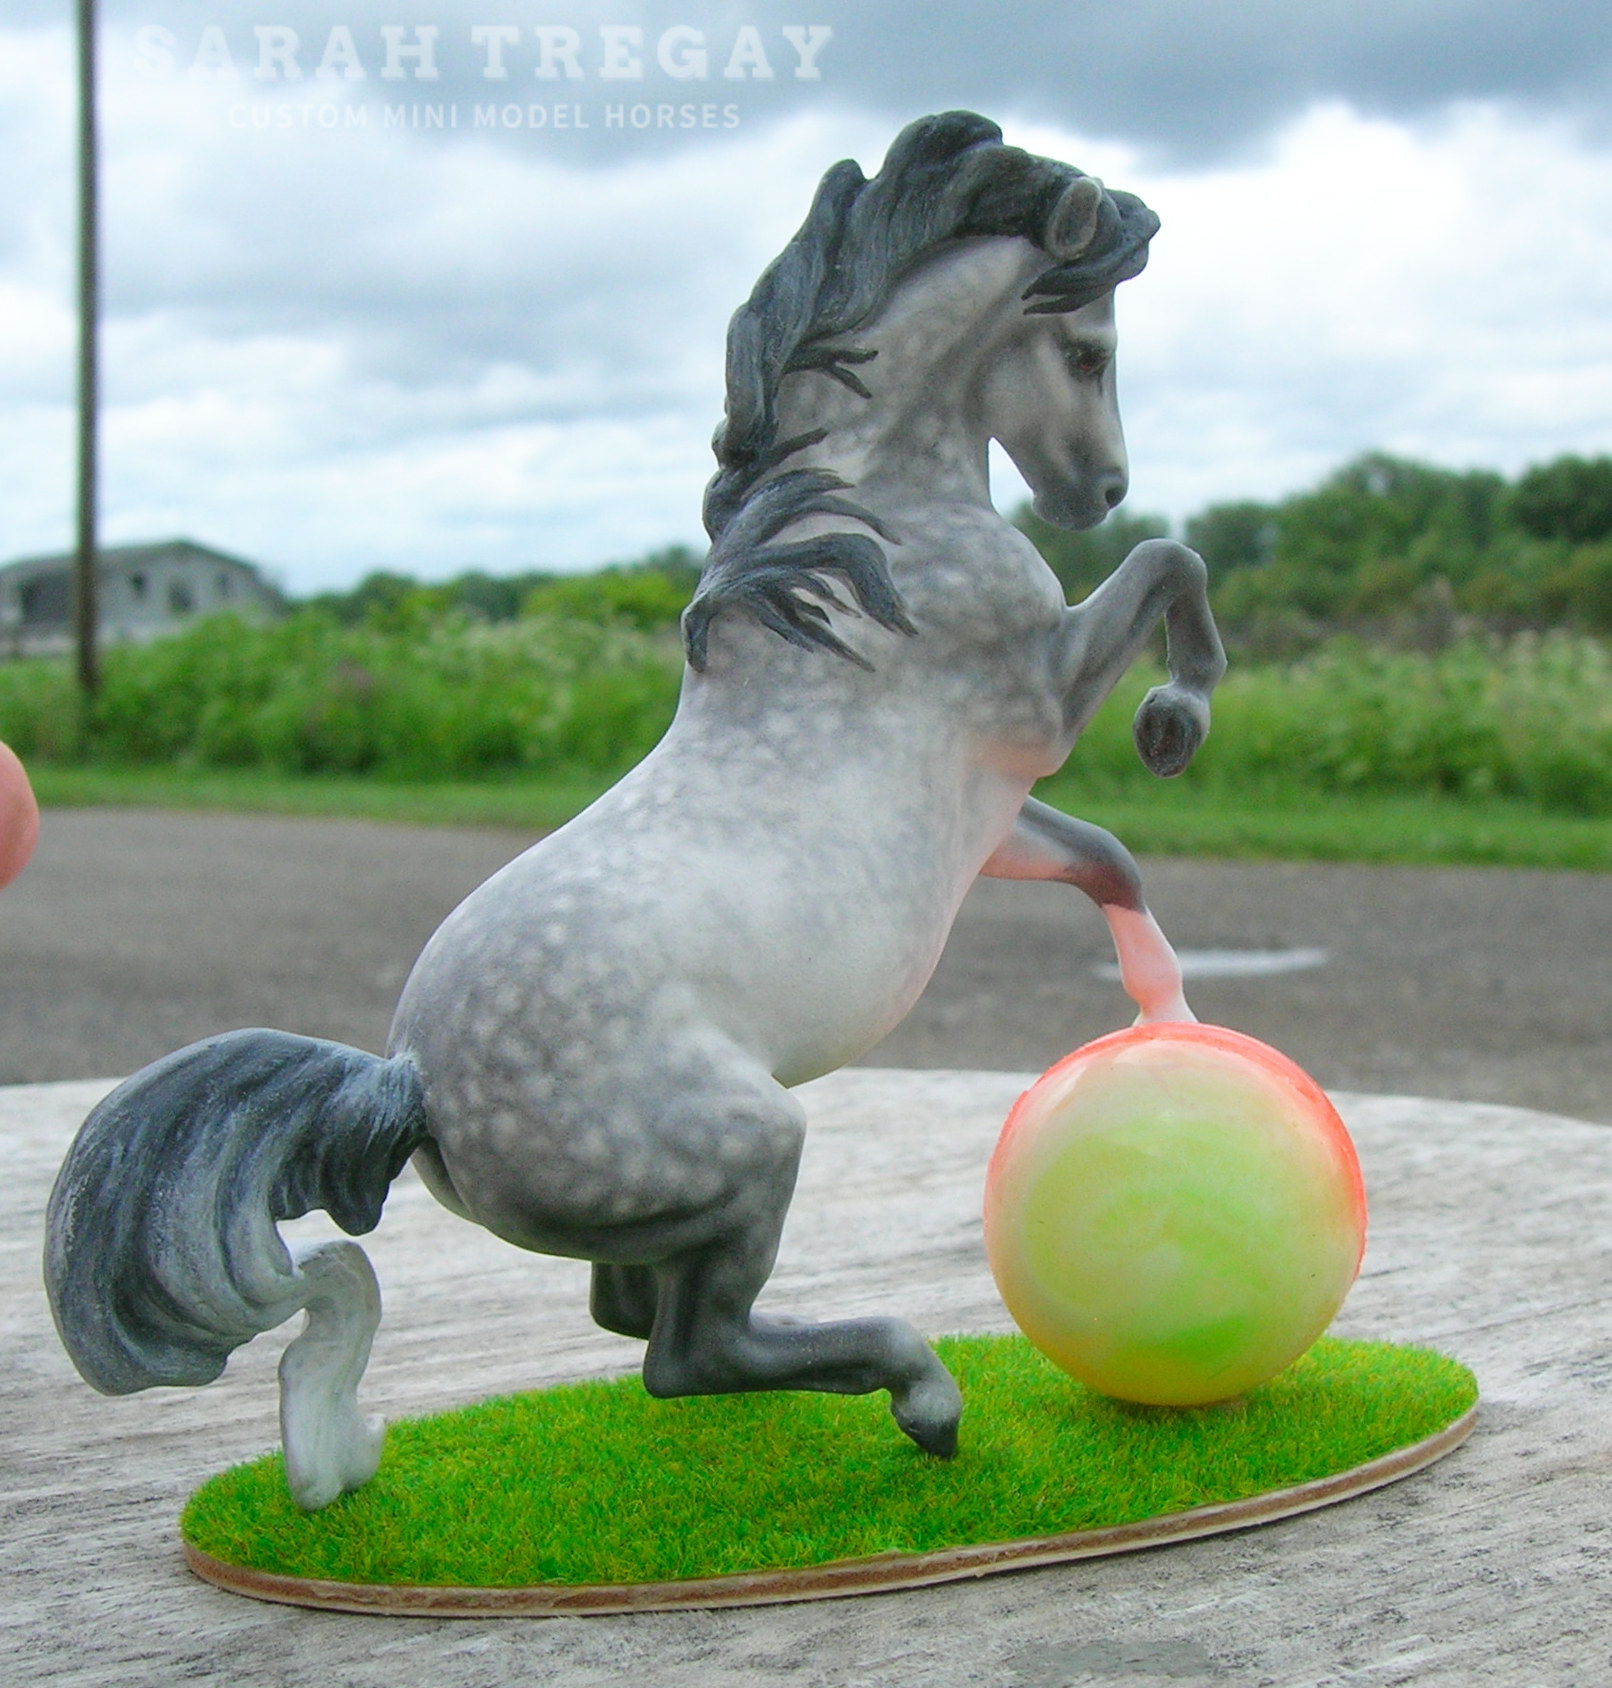 CM Mini Croi/Connamara Mare by Sarah Tregay, a Custom Mini/ Stablemate Model Horse dapple gray